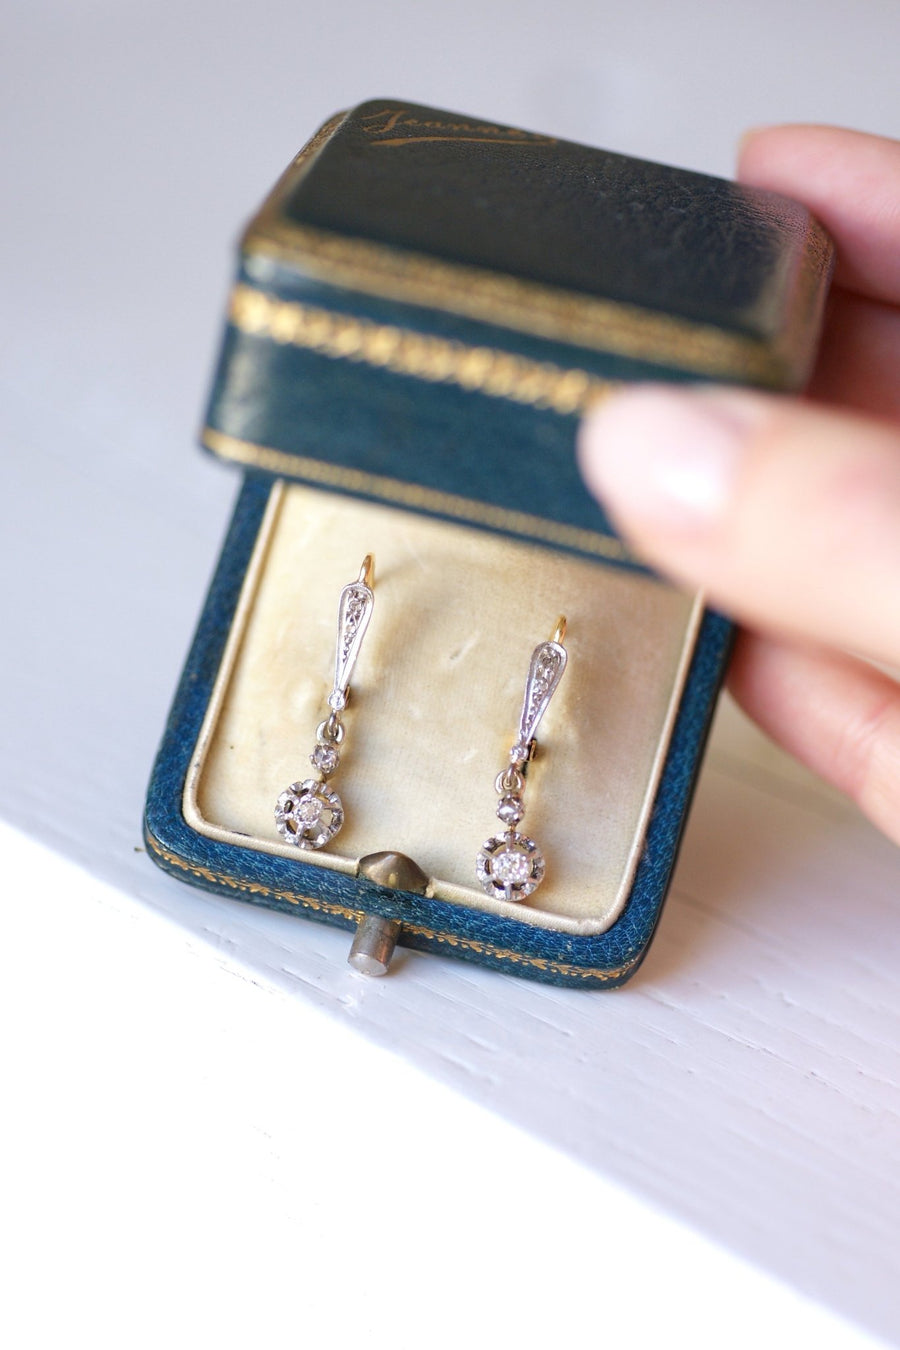 Antique sleeper earrings with diamonds - Penelope Gallery